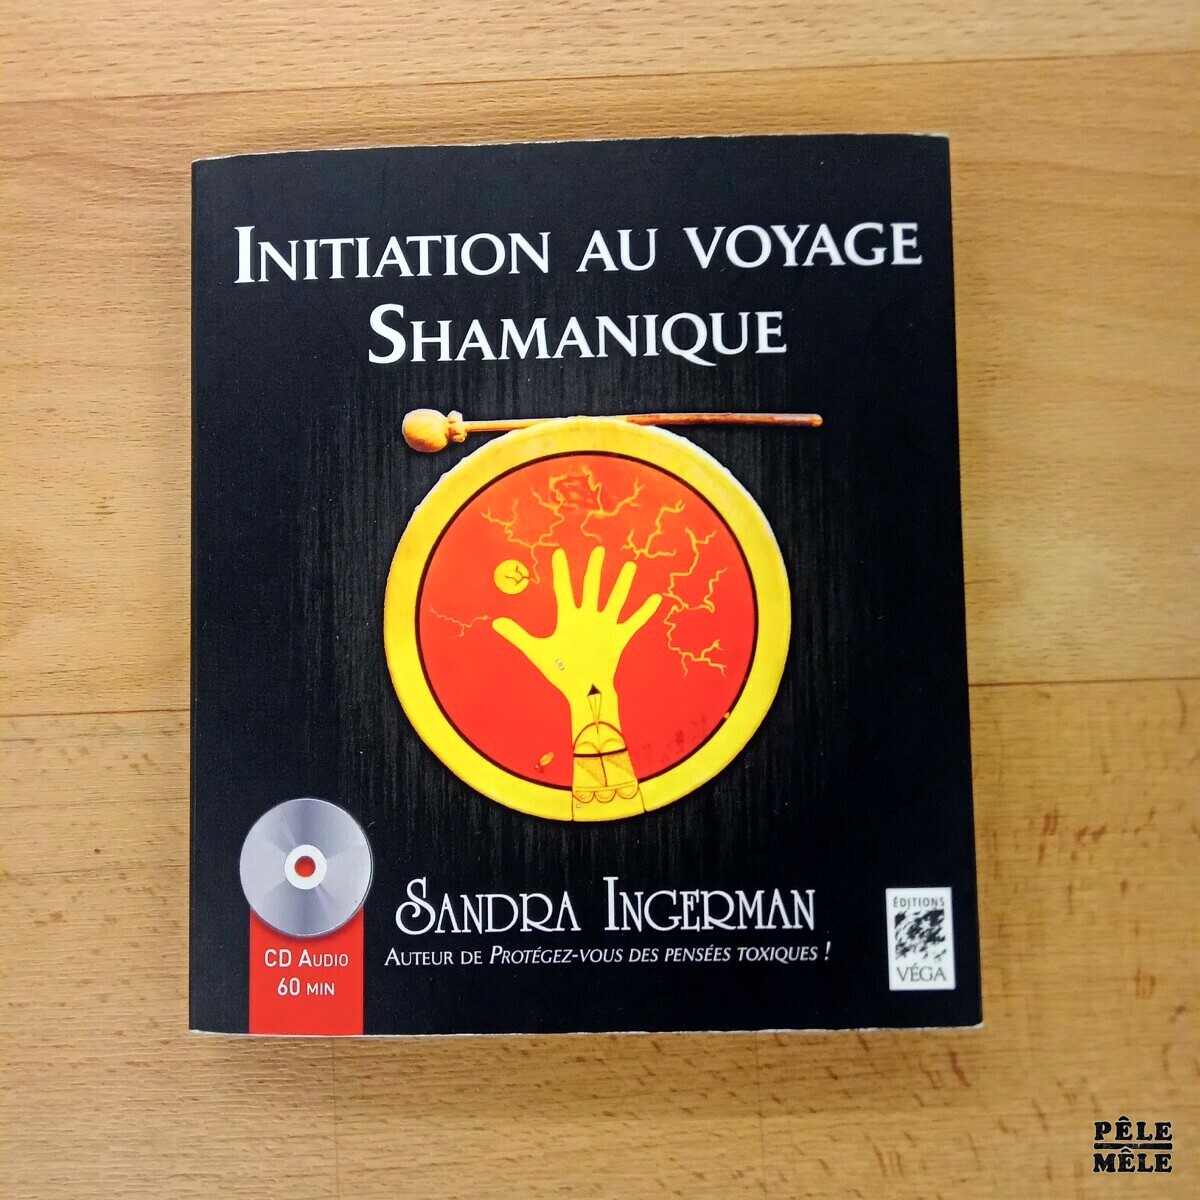 invitation au voyage chamanique sandra ingerman